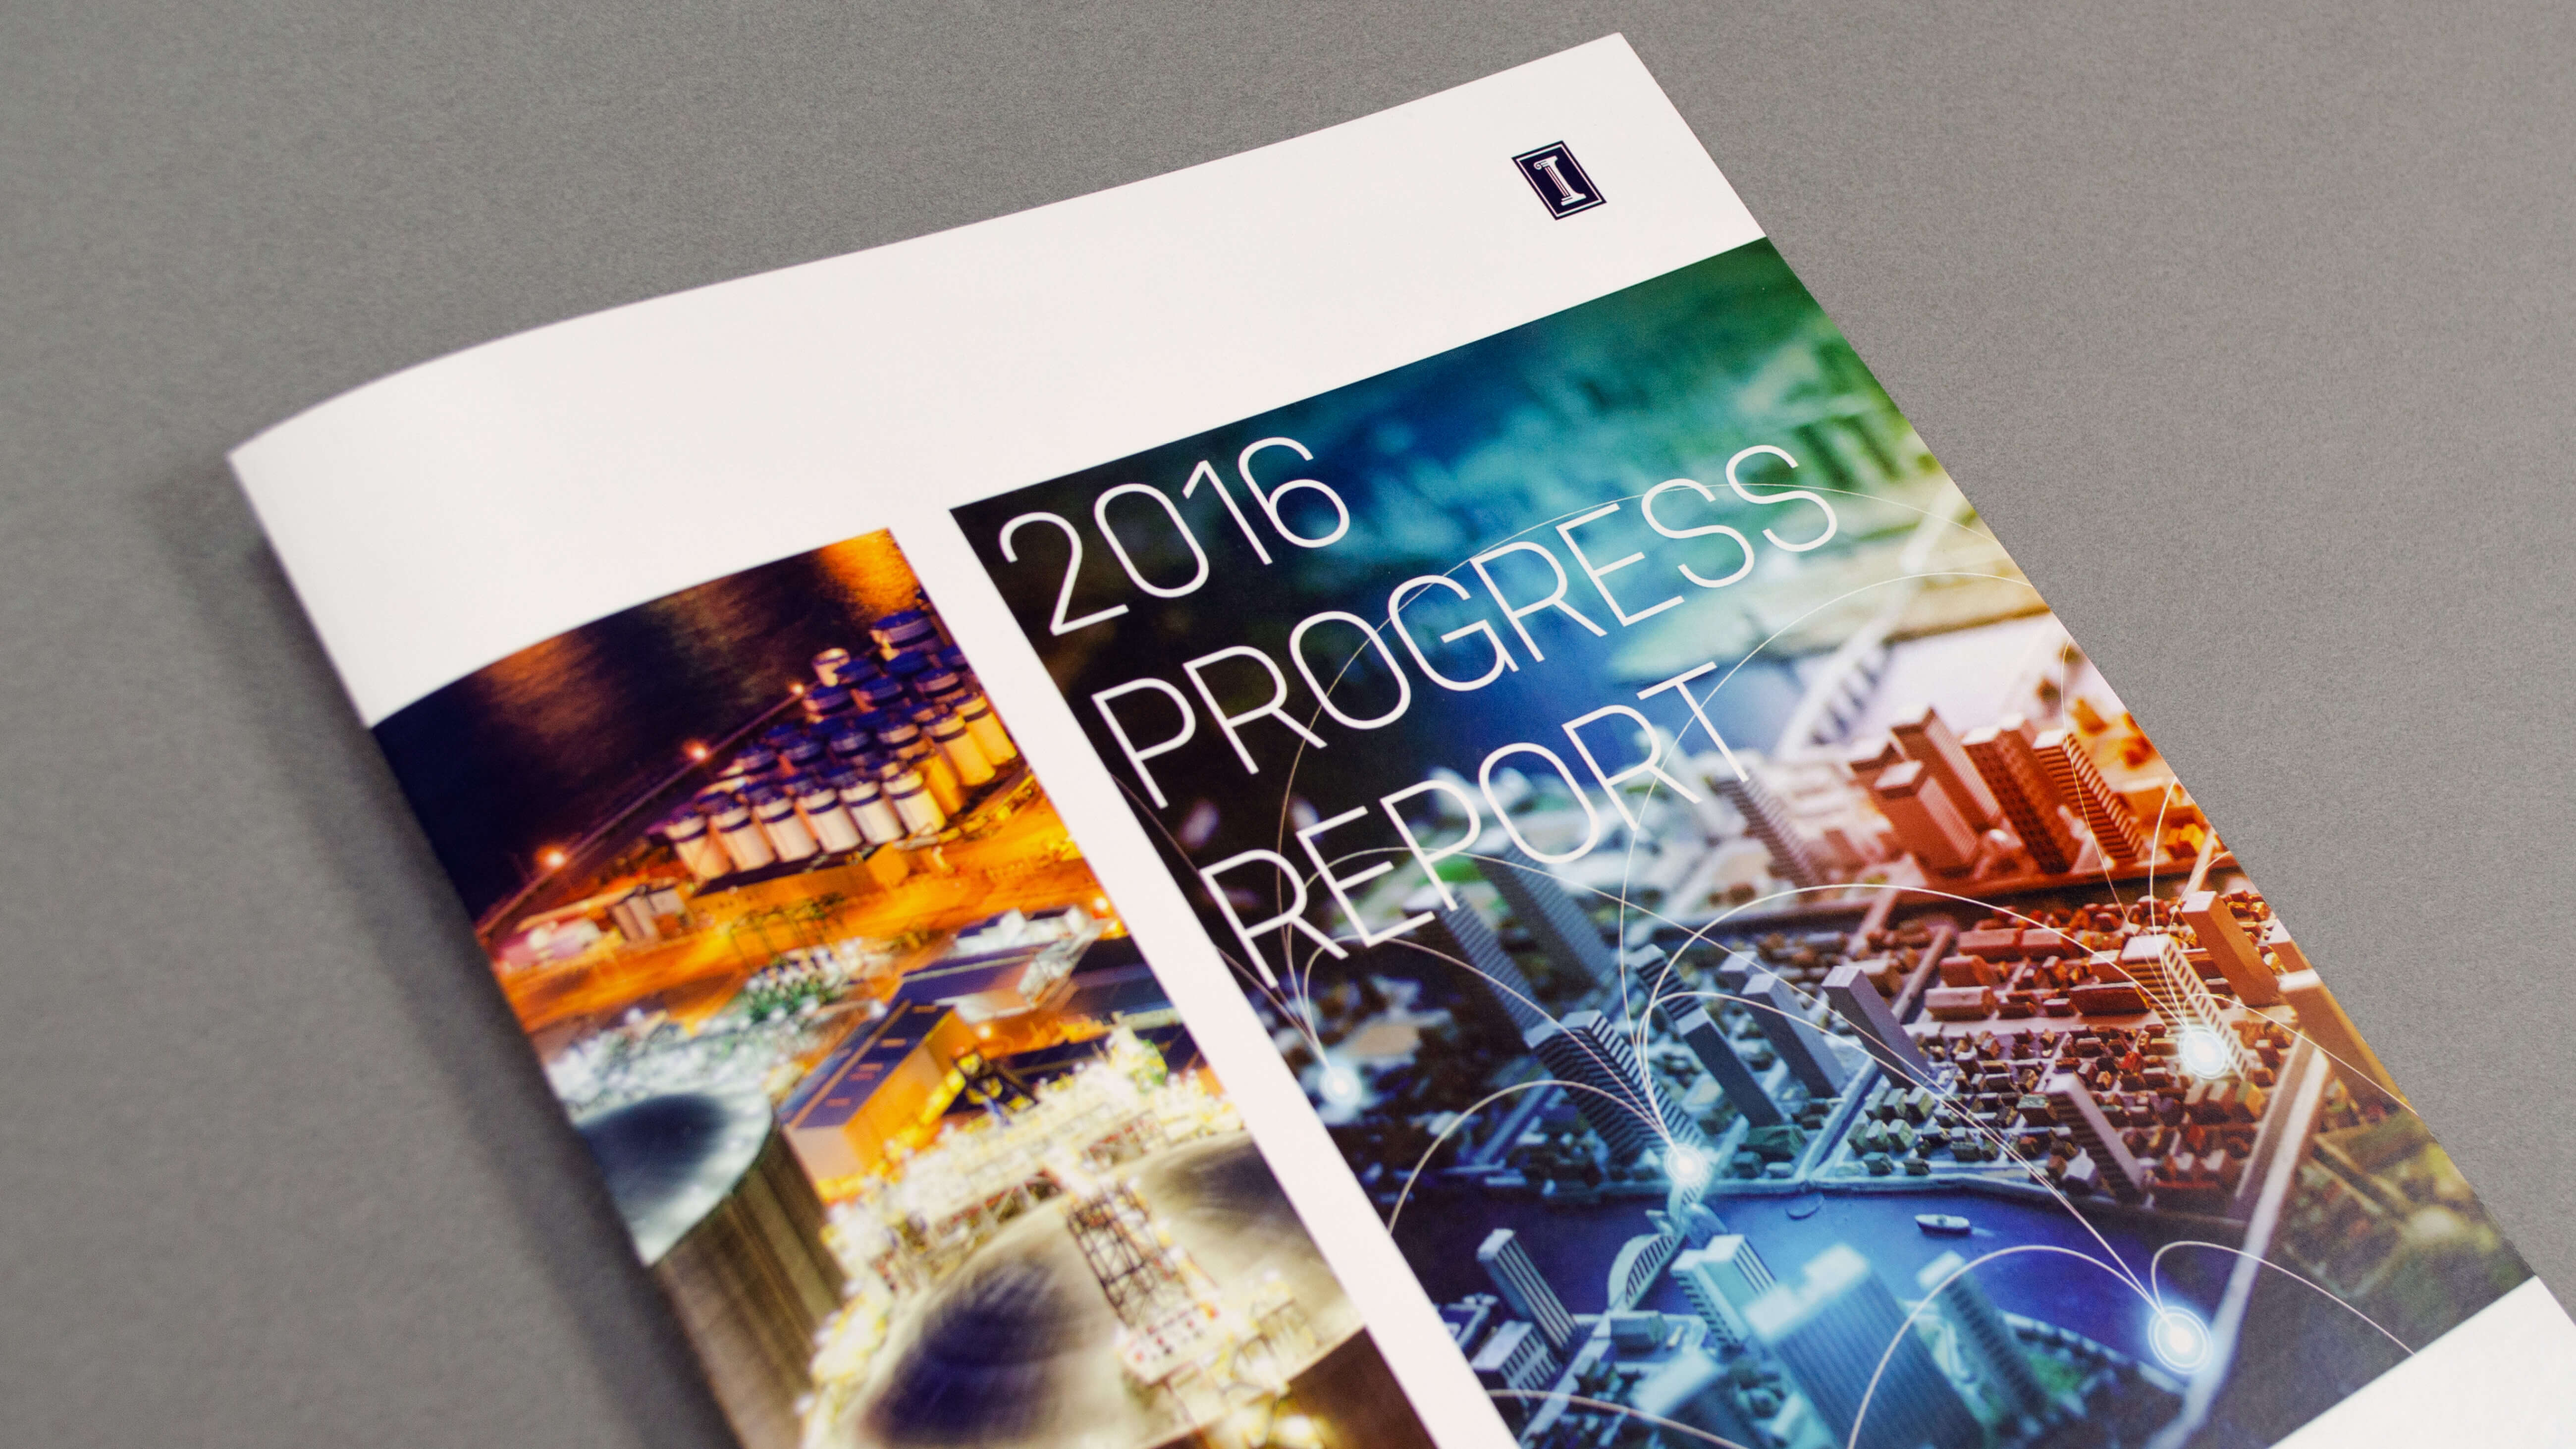 Applied Research Institute - 2016 Progress Report